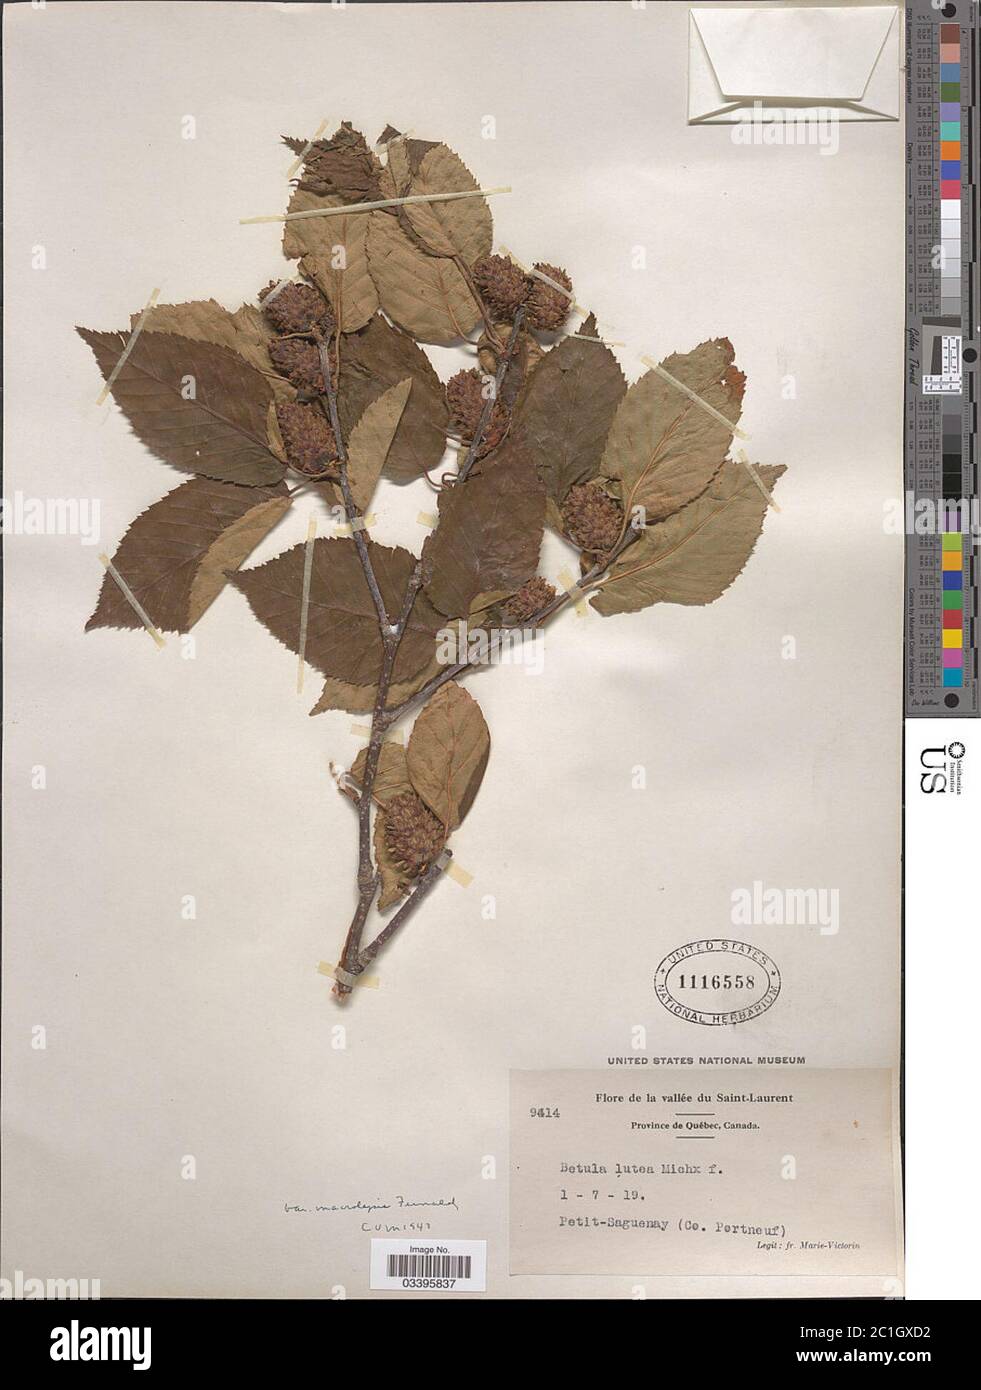 Betula lutea subsp macrolepis Fernald Betula lutea subsp macrolepis Fernald. Stock Photo